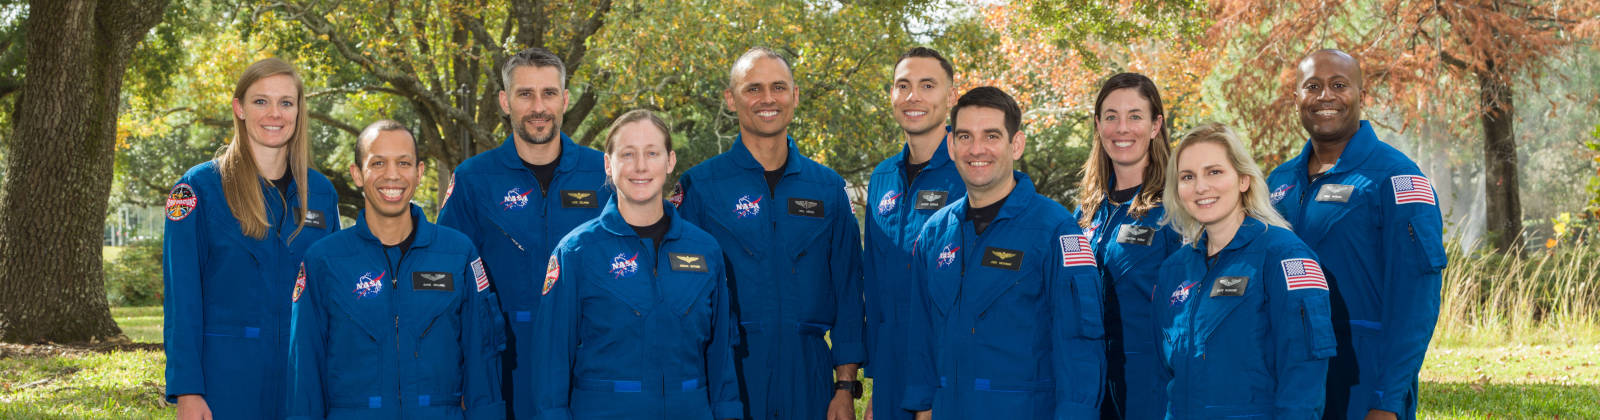 astronautes-nasa-classe-2021